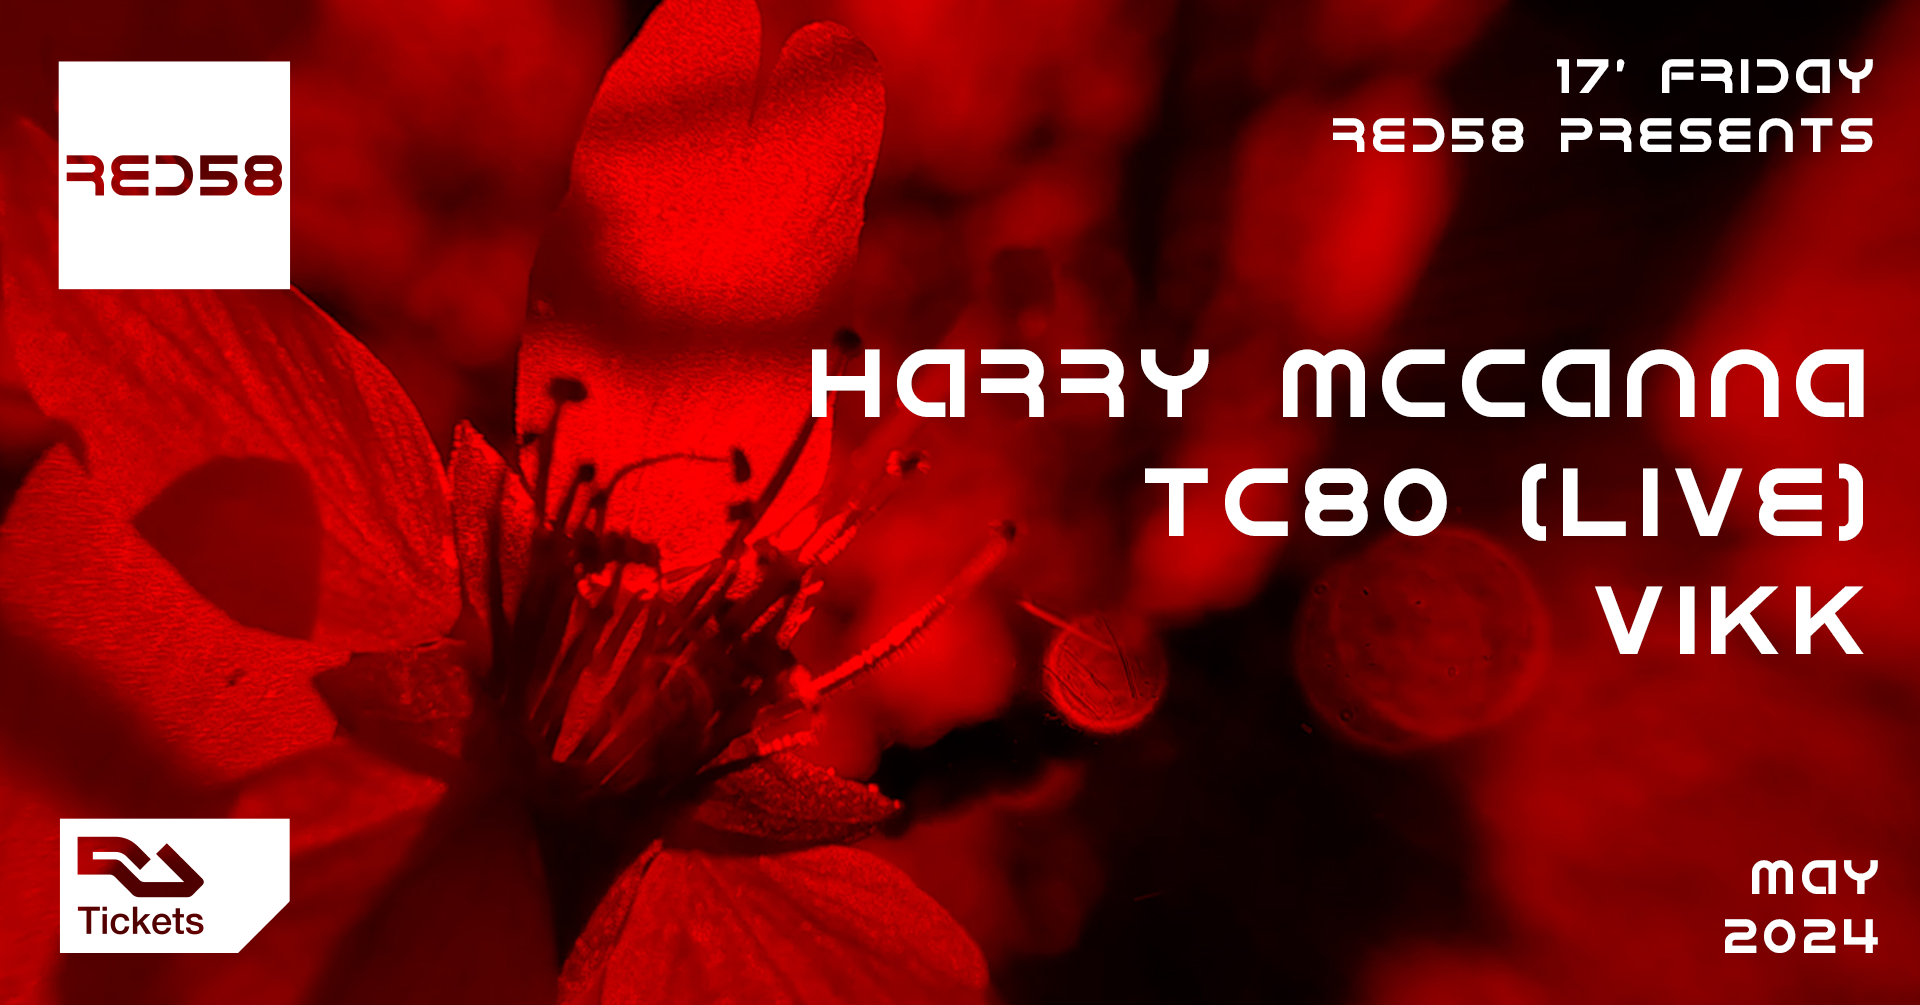 RED58 presents Harry McCanna, TC80 (LIVE) & VIKk - Página frontal